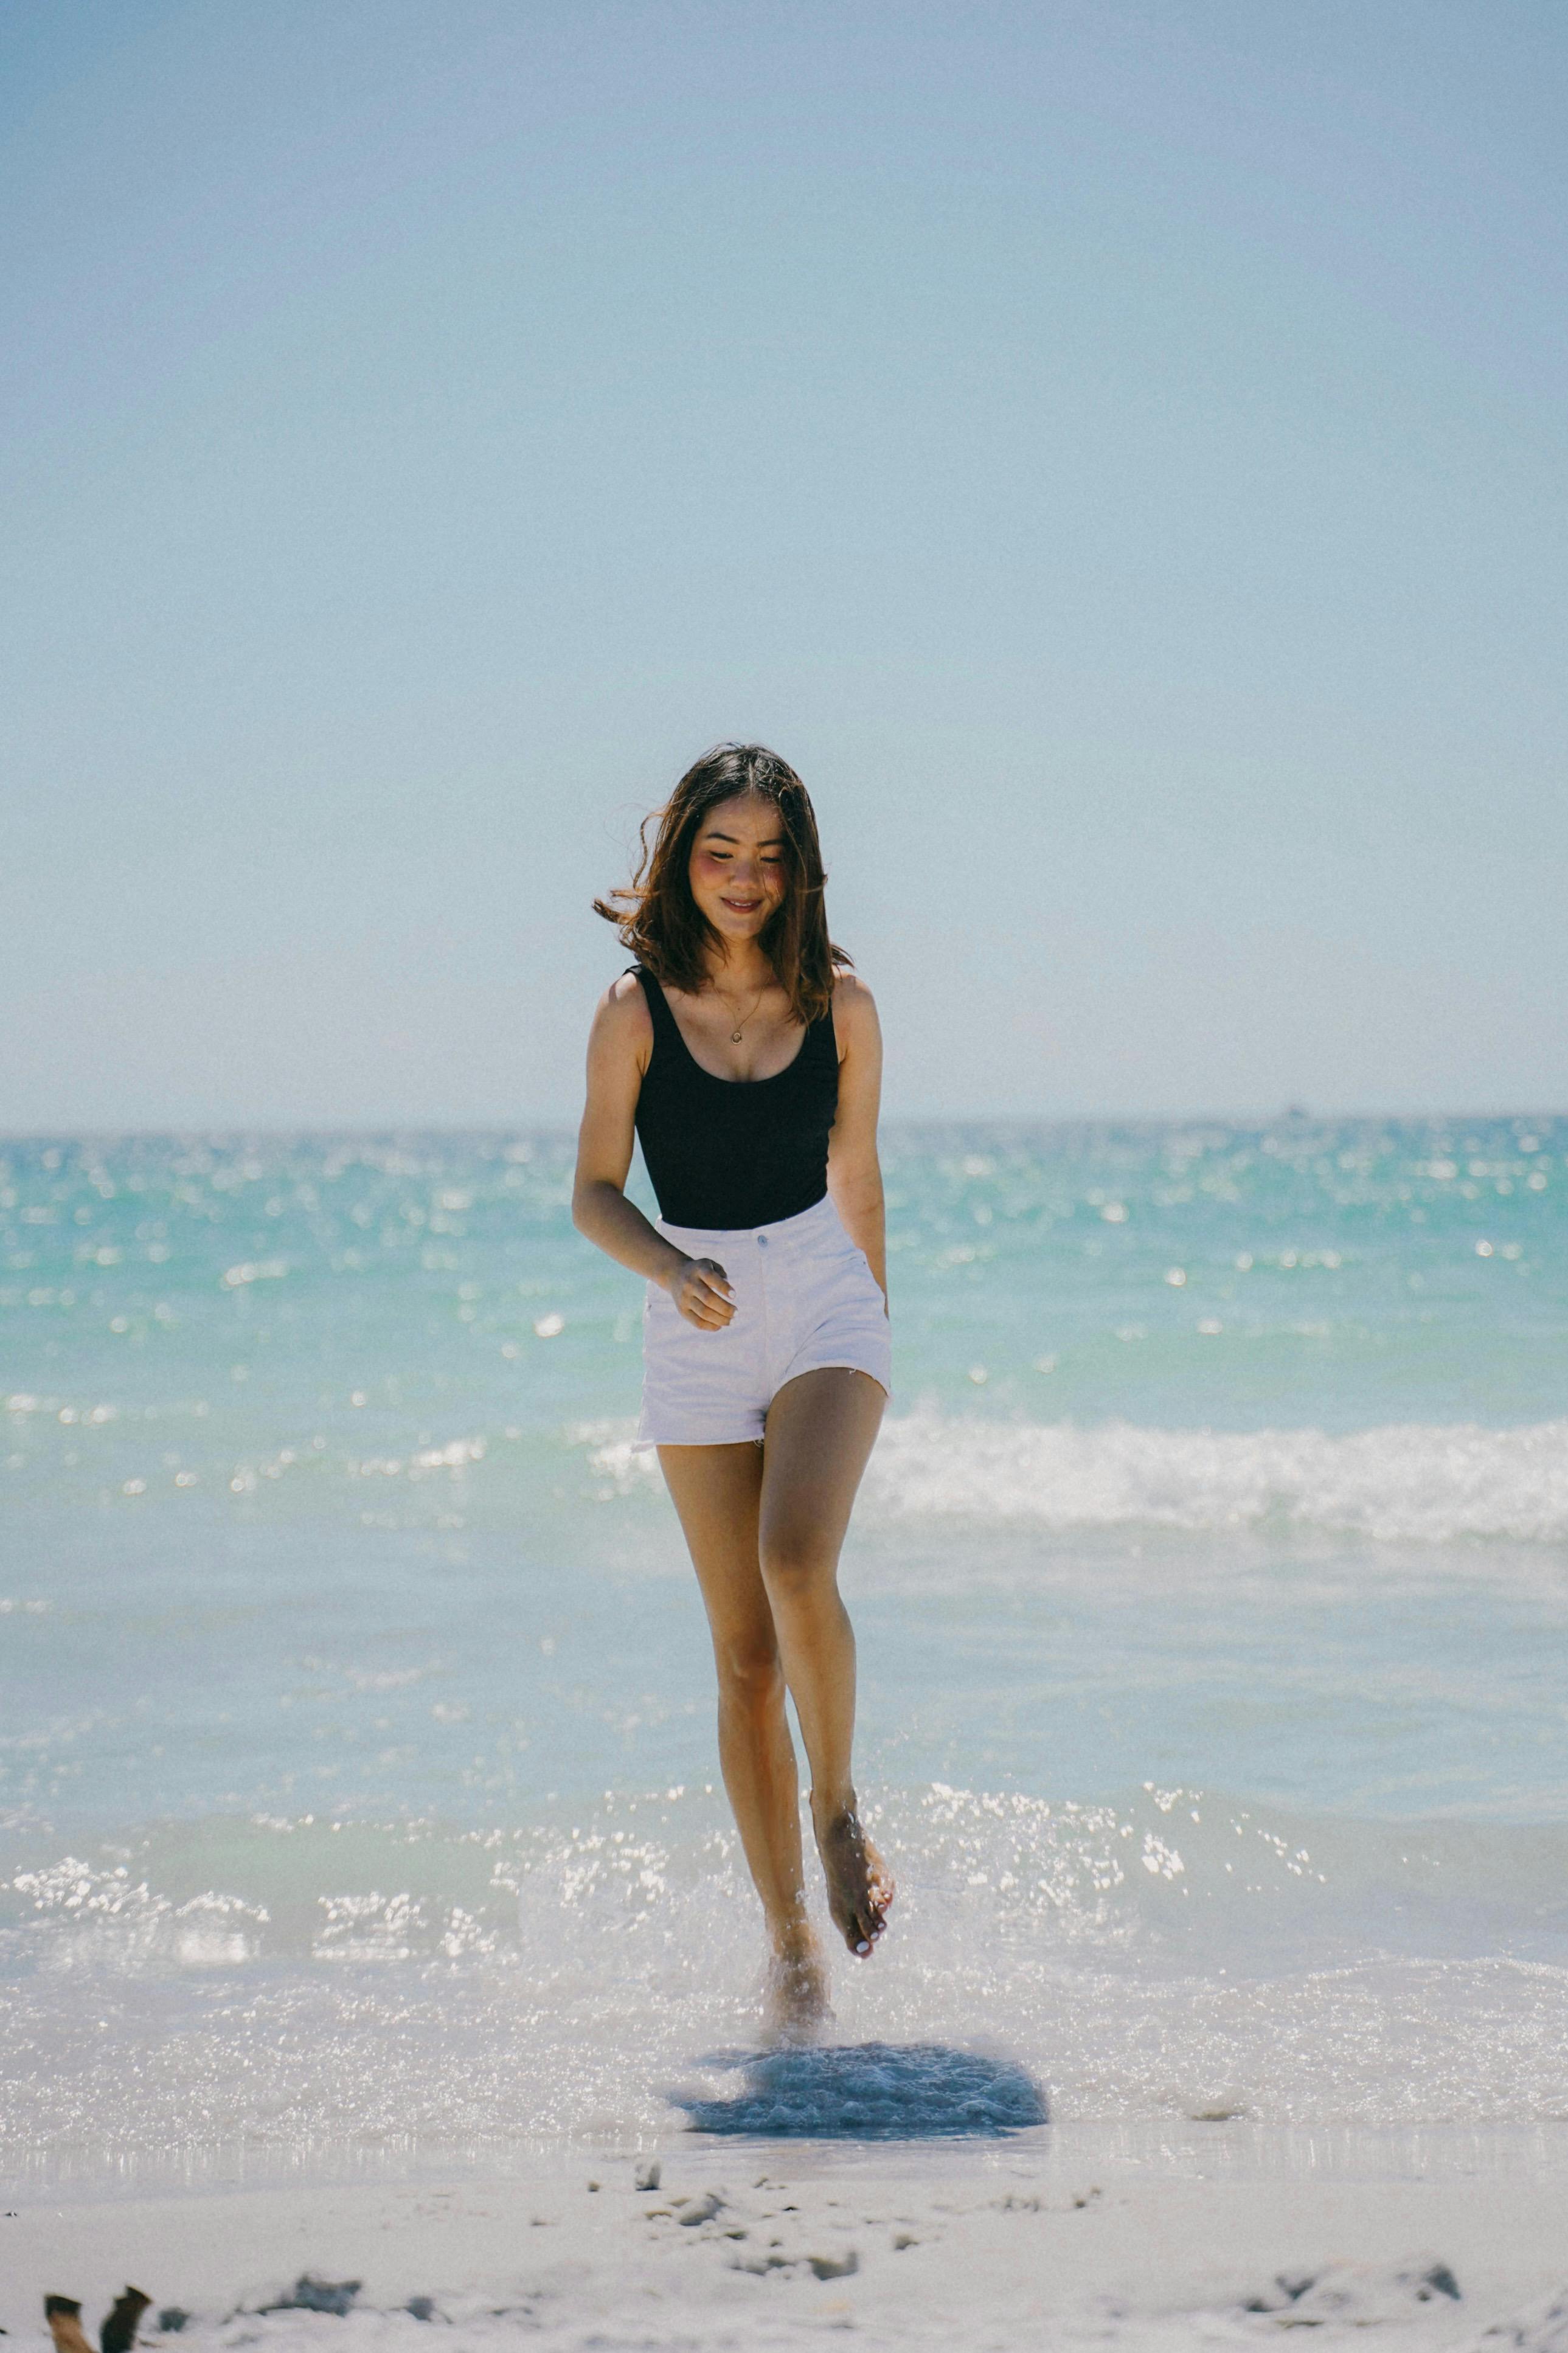 Girl running on sand stock image. Image of healthy, girl - 5850991